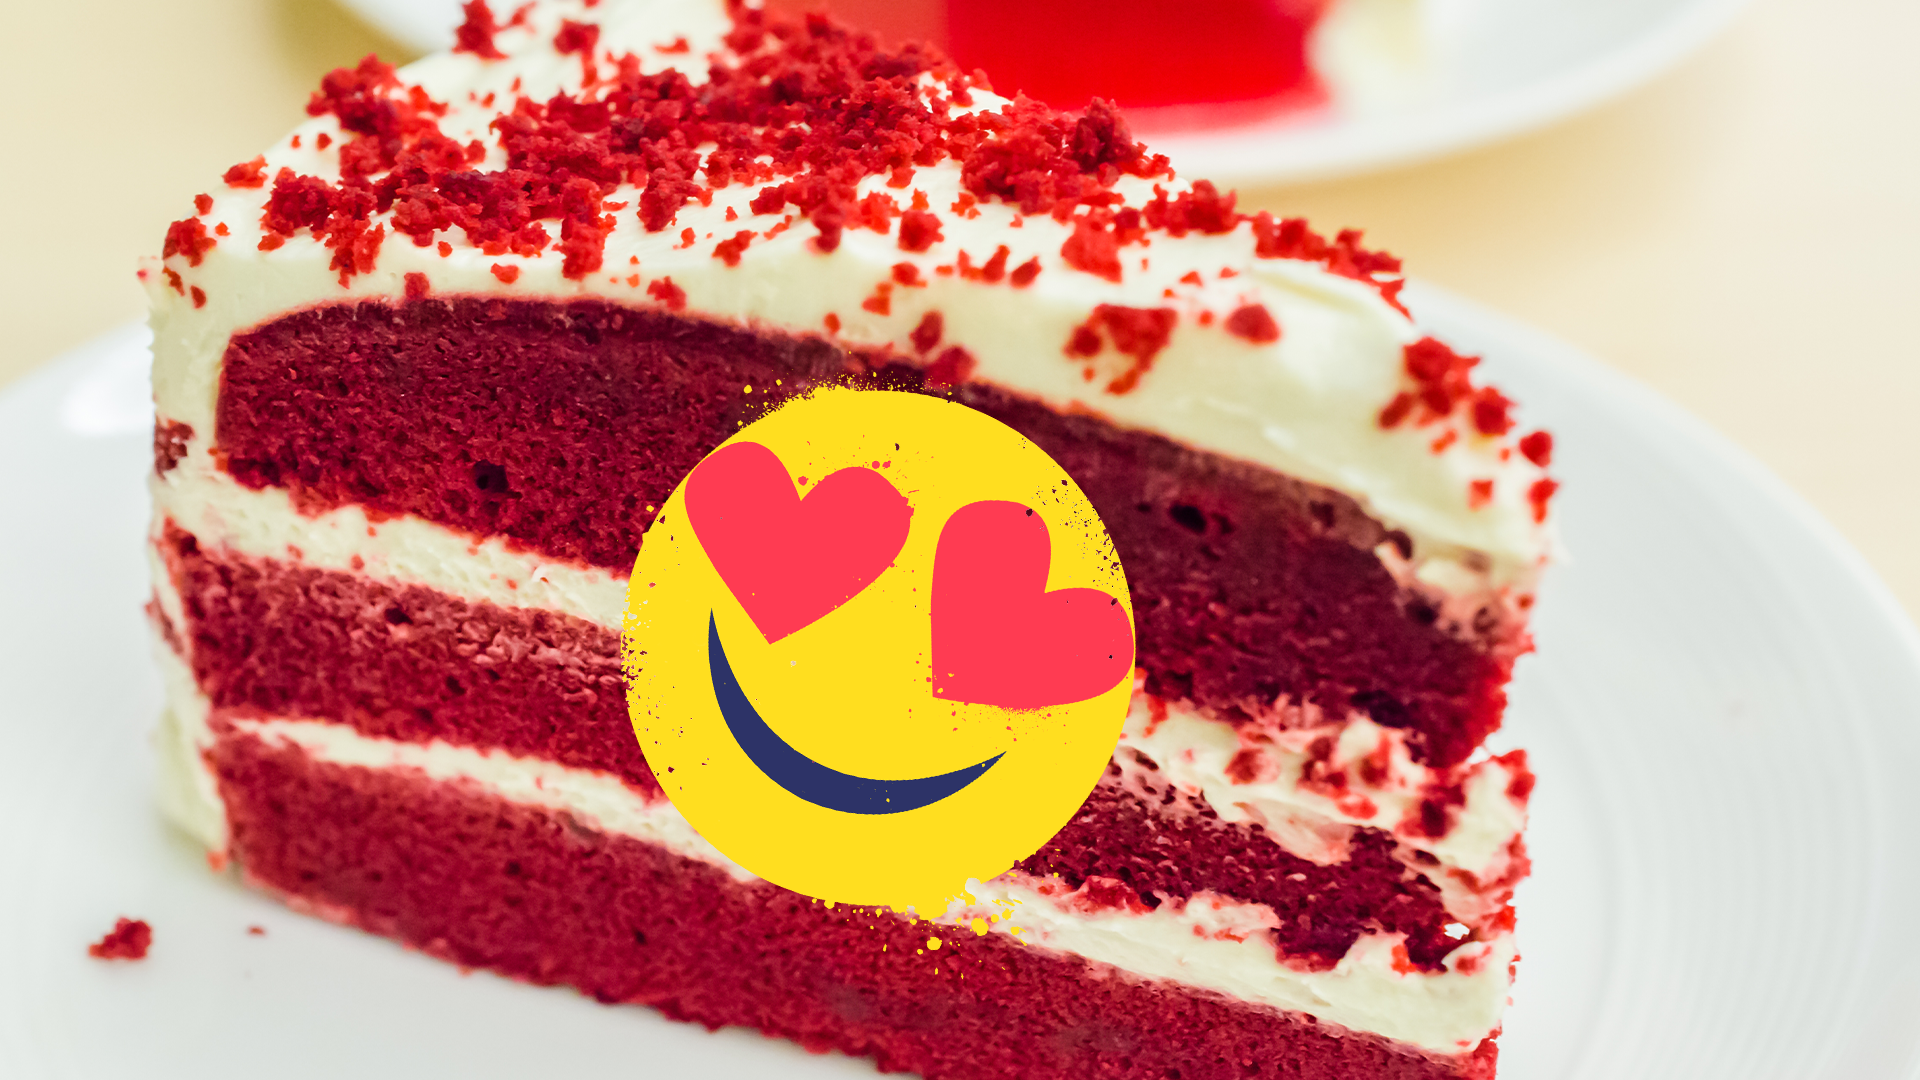 Cake with heart eyes emoji